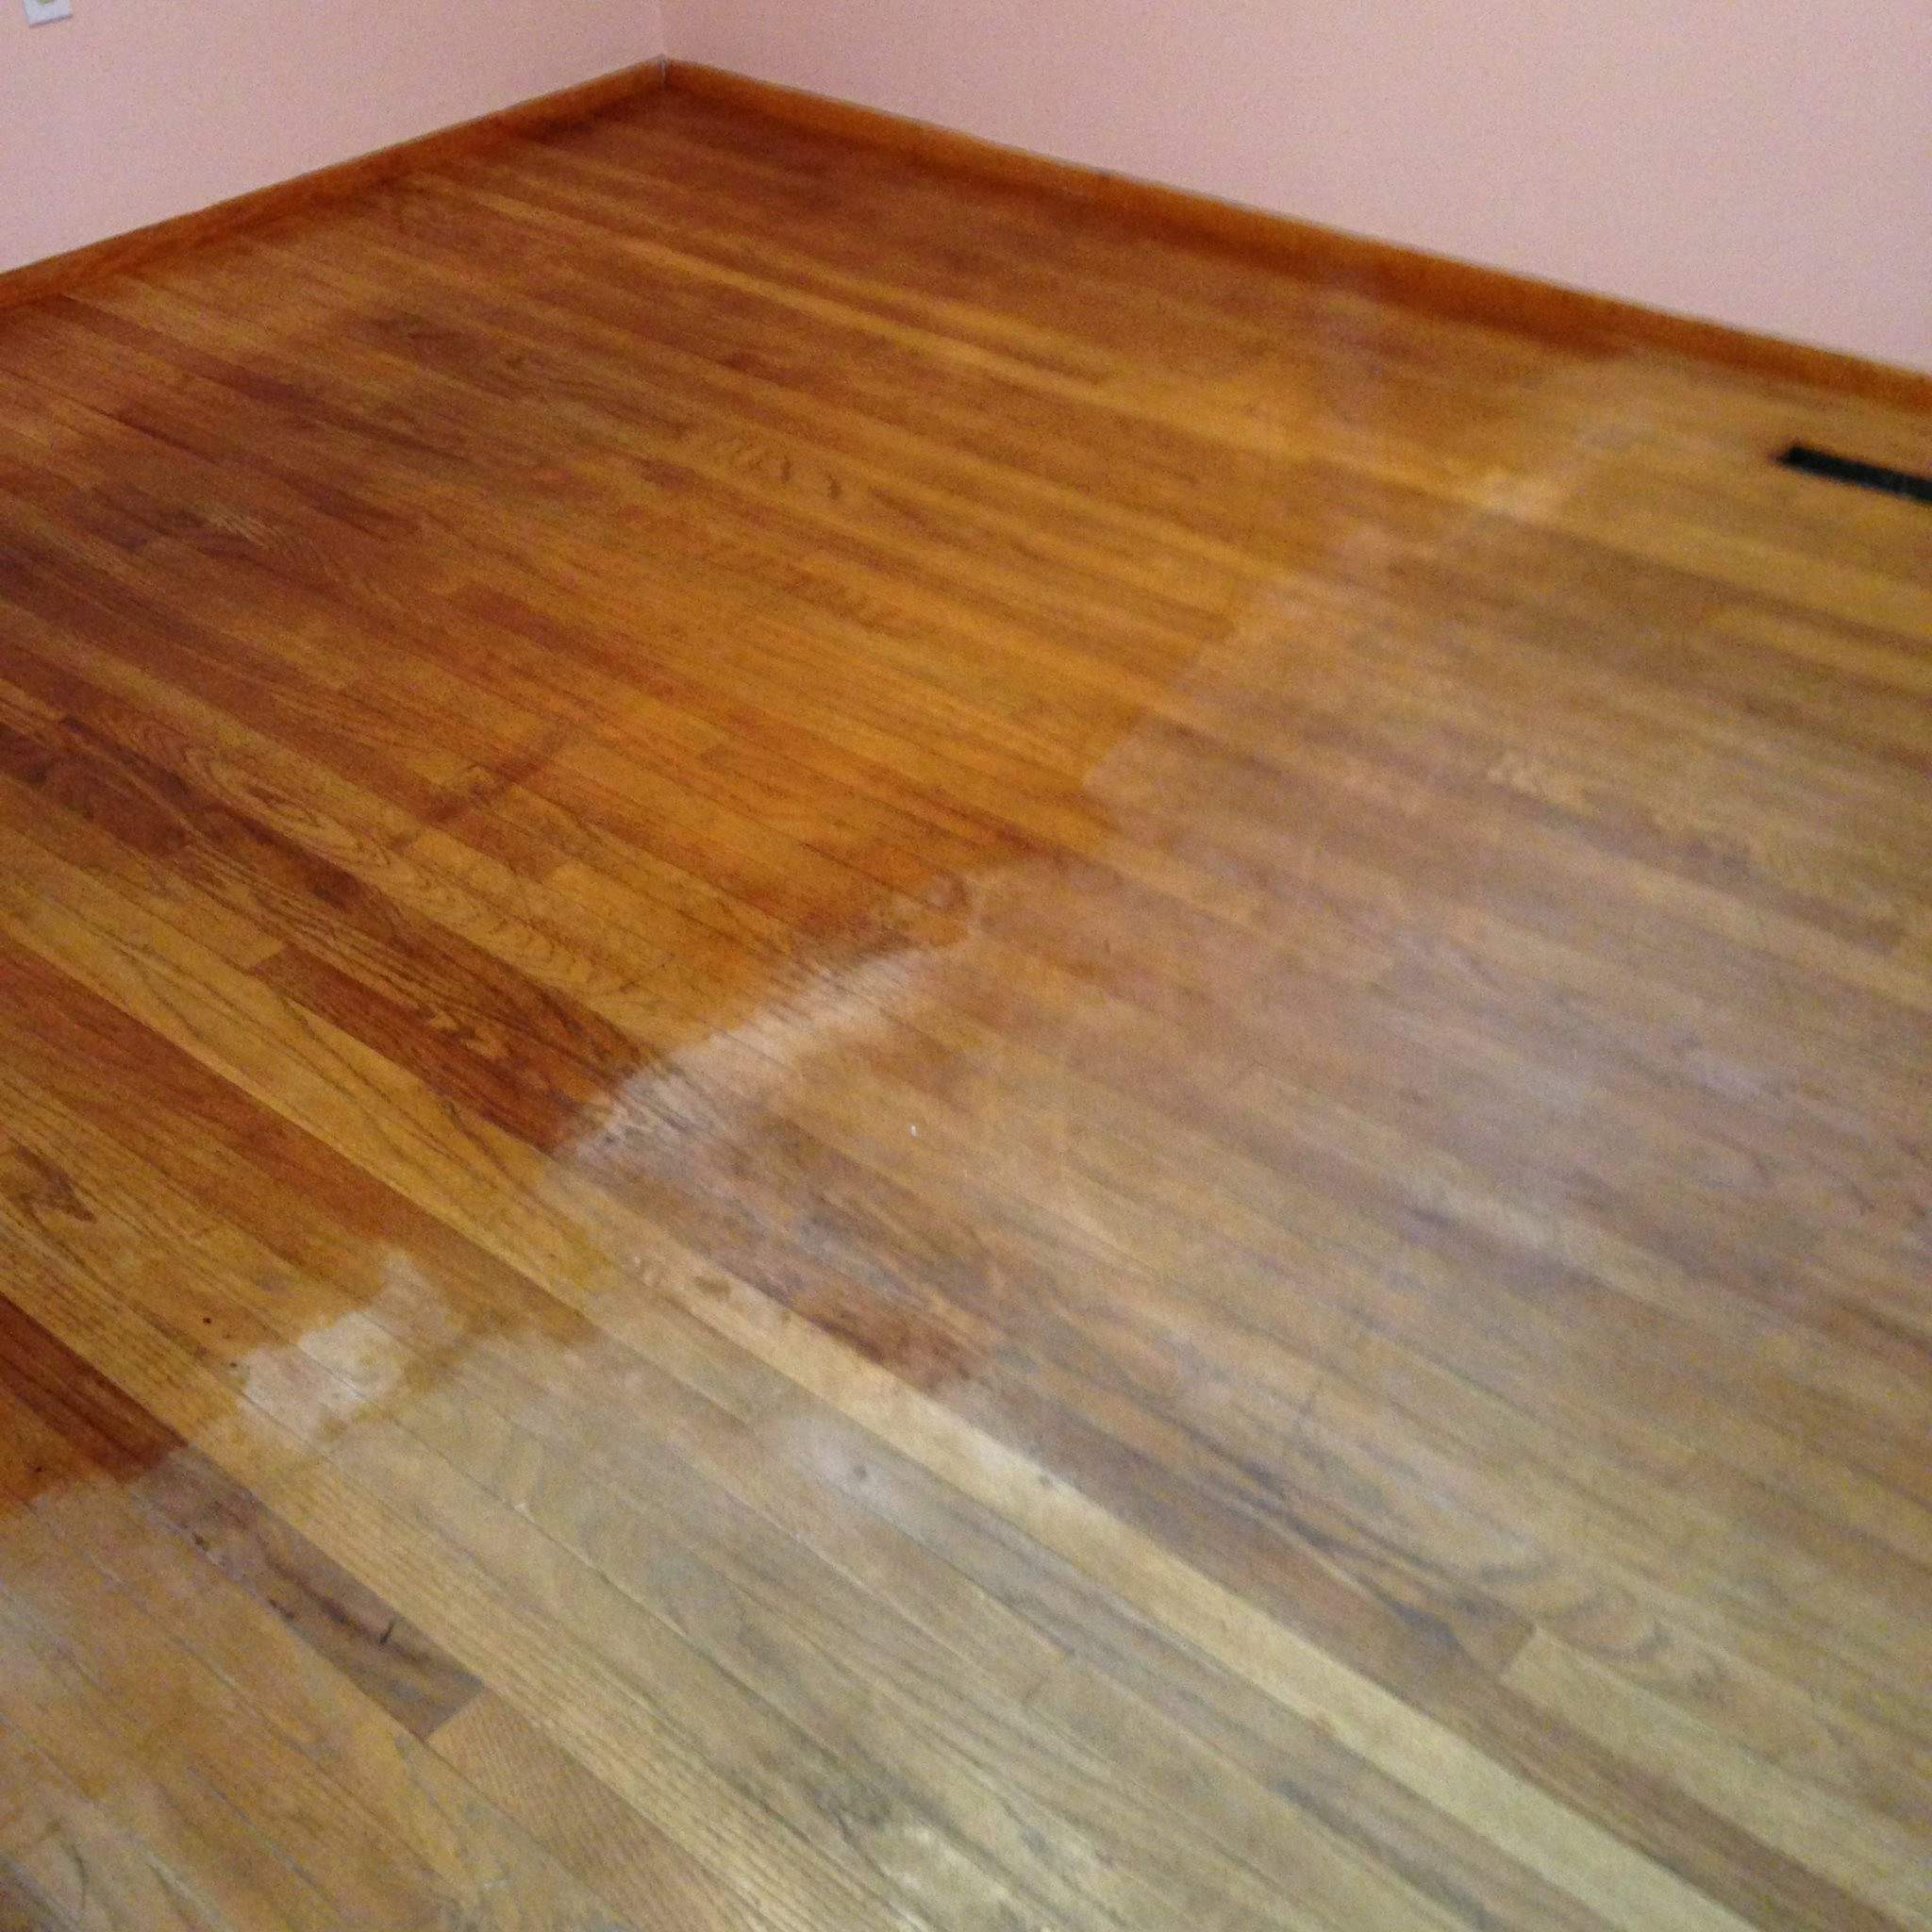 best hardwood floor mop 2016 of 15 wood floor hacks every homeowner needs to know within wood floor hacks 15